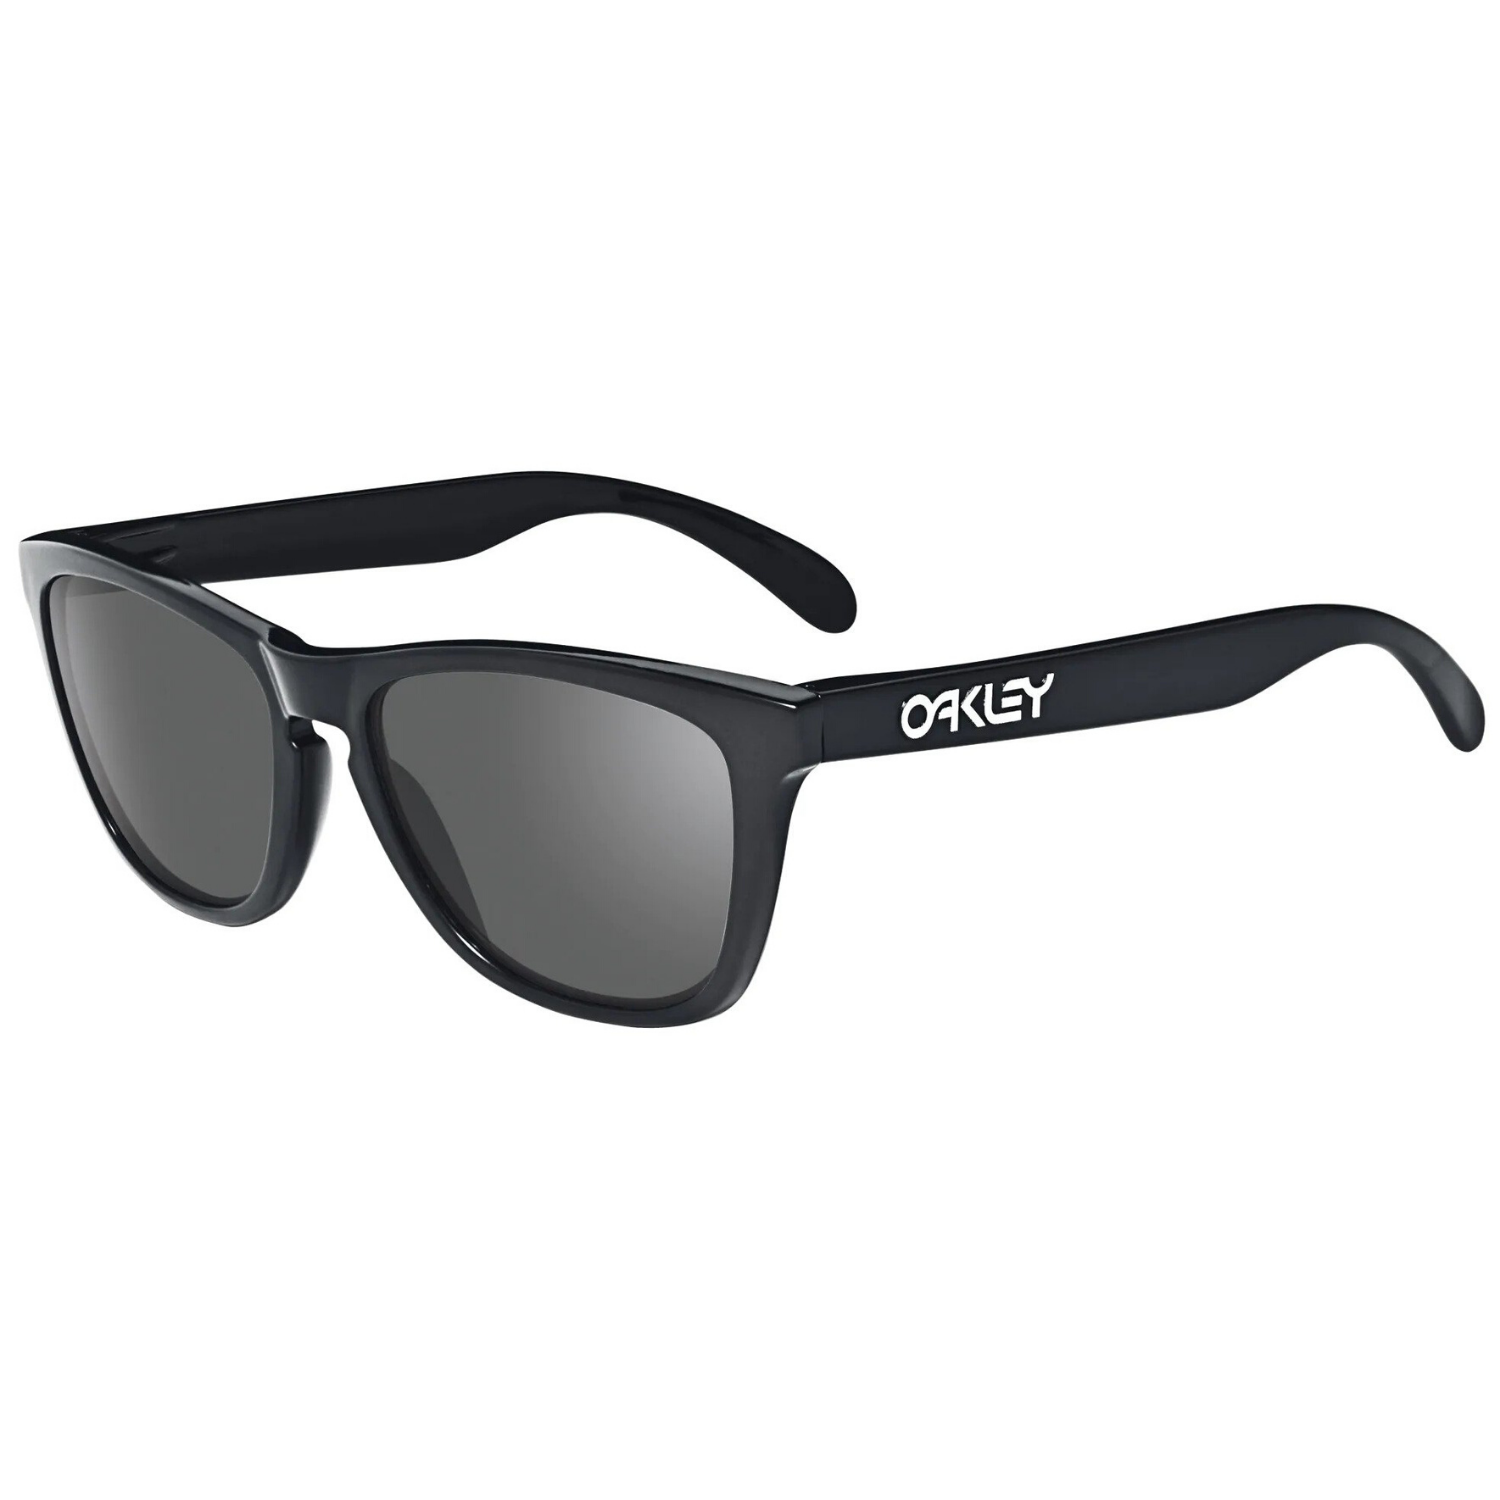 Oakley Frogskins Sunglasses For Sale